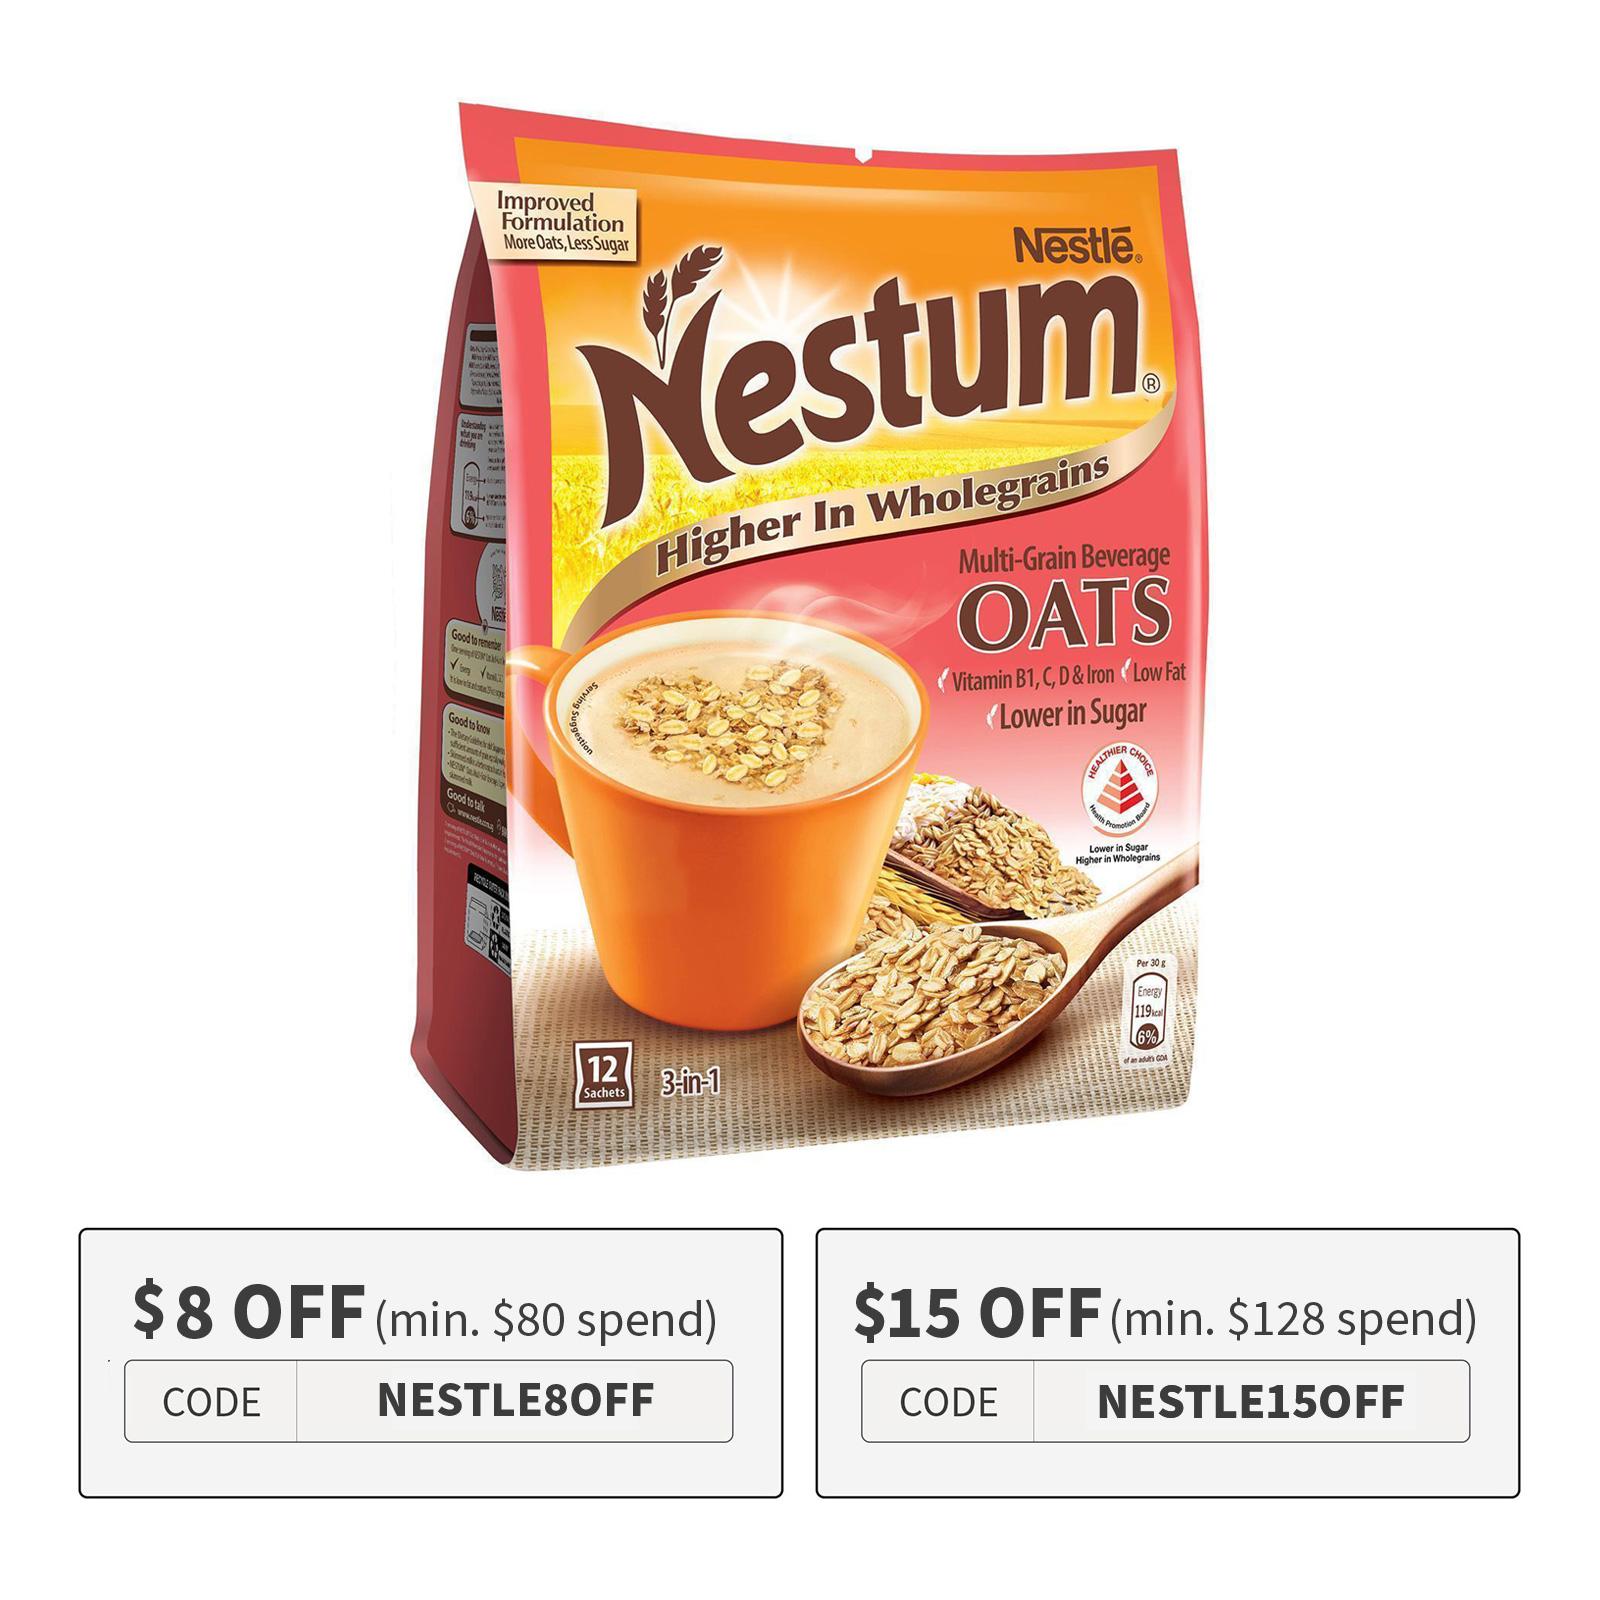 Nestle Nestum 3-in-1 Wholegrain Beverage - Soy